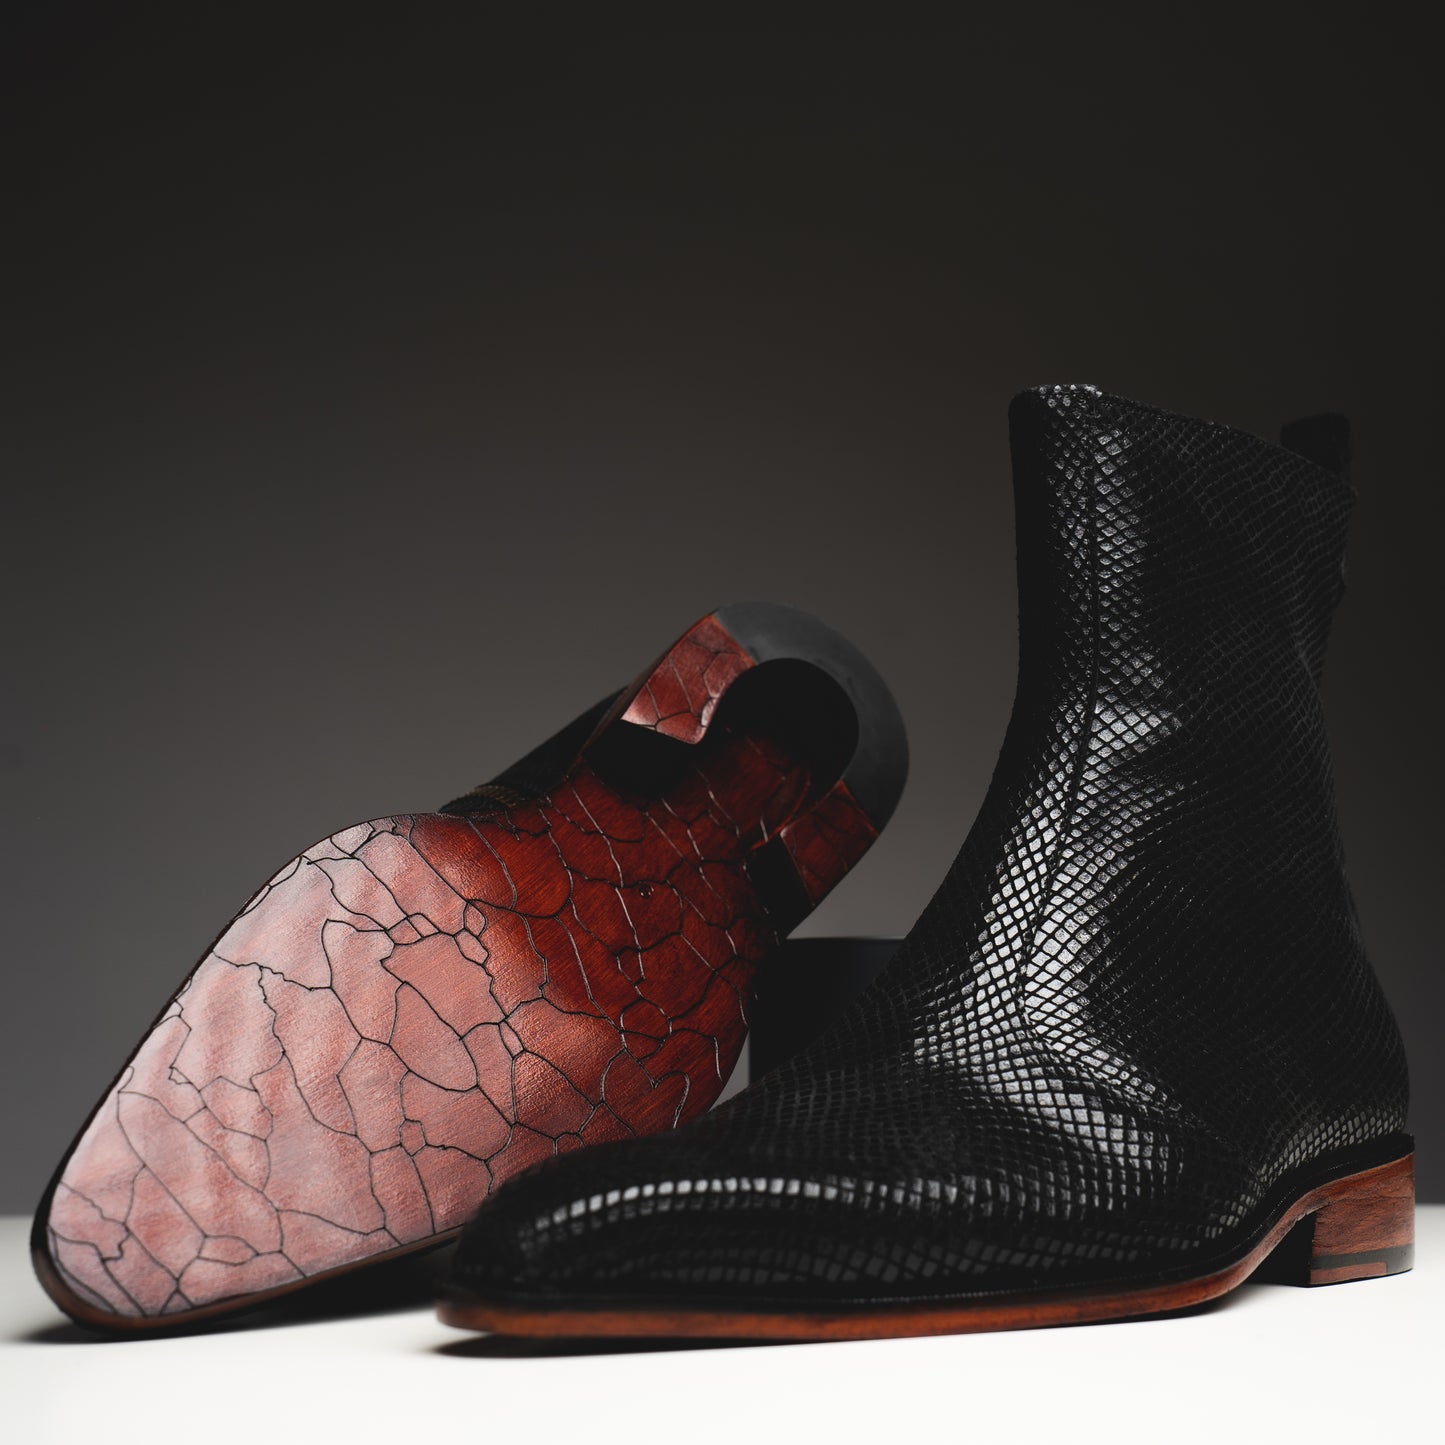 Black printed python boots